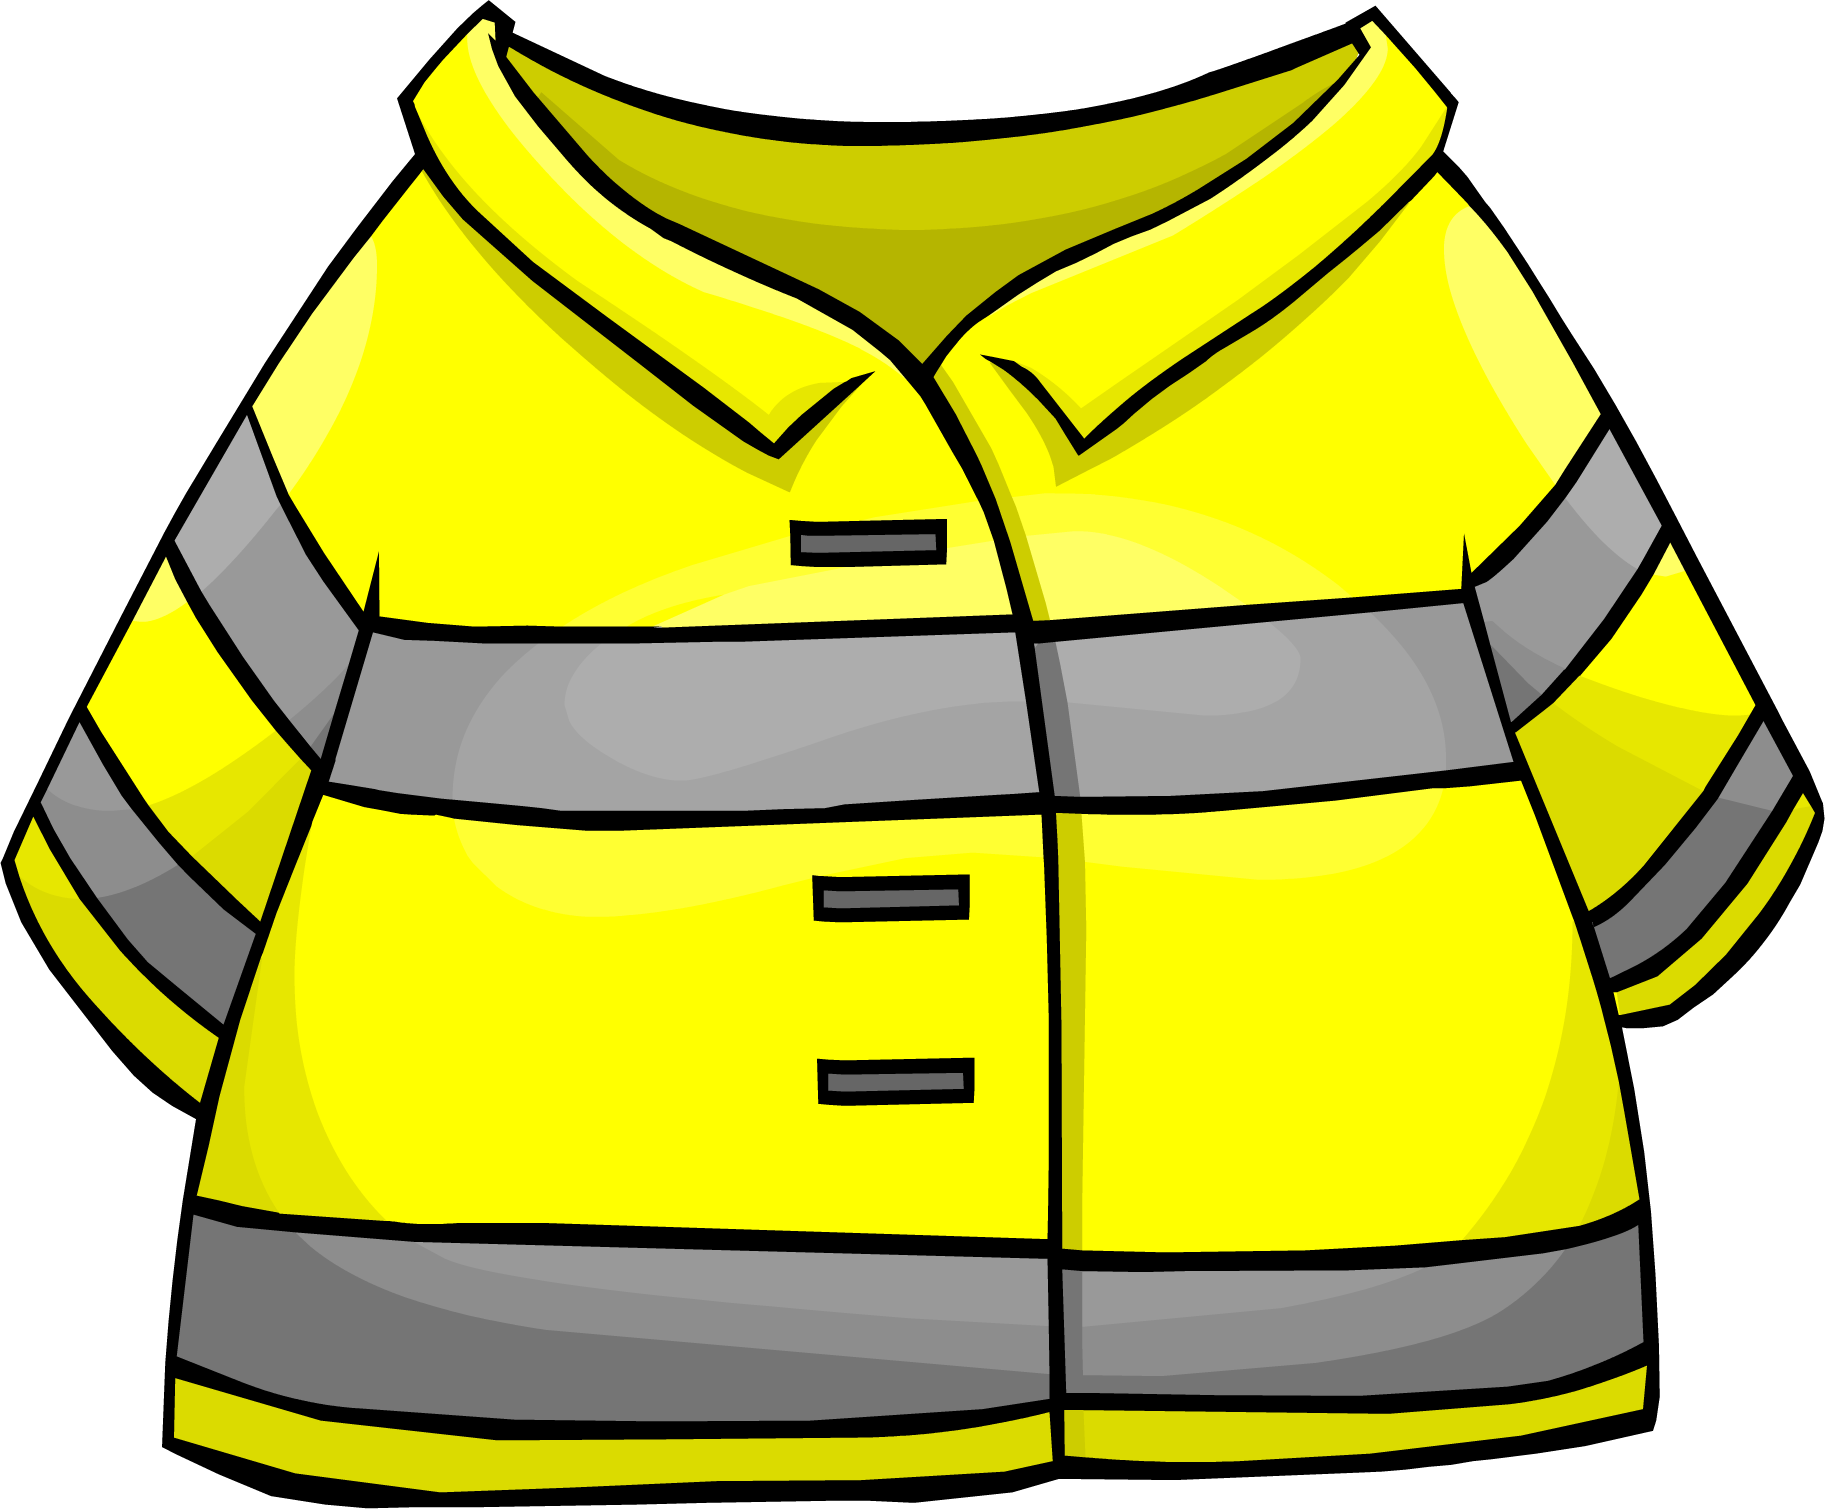 Fireman jacket clipart